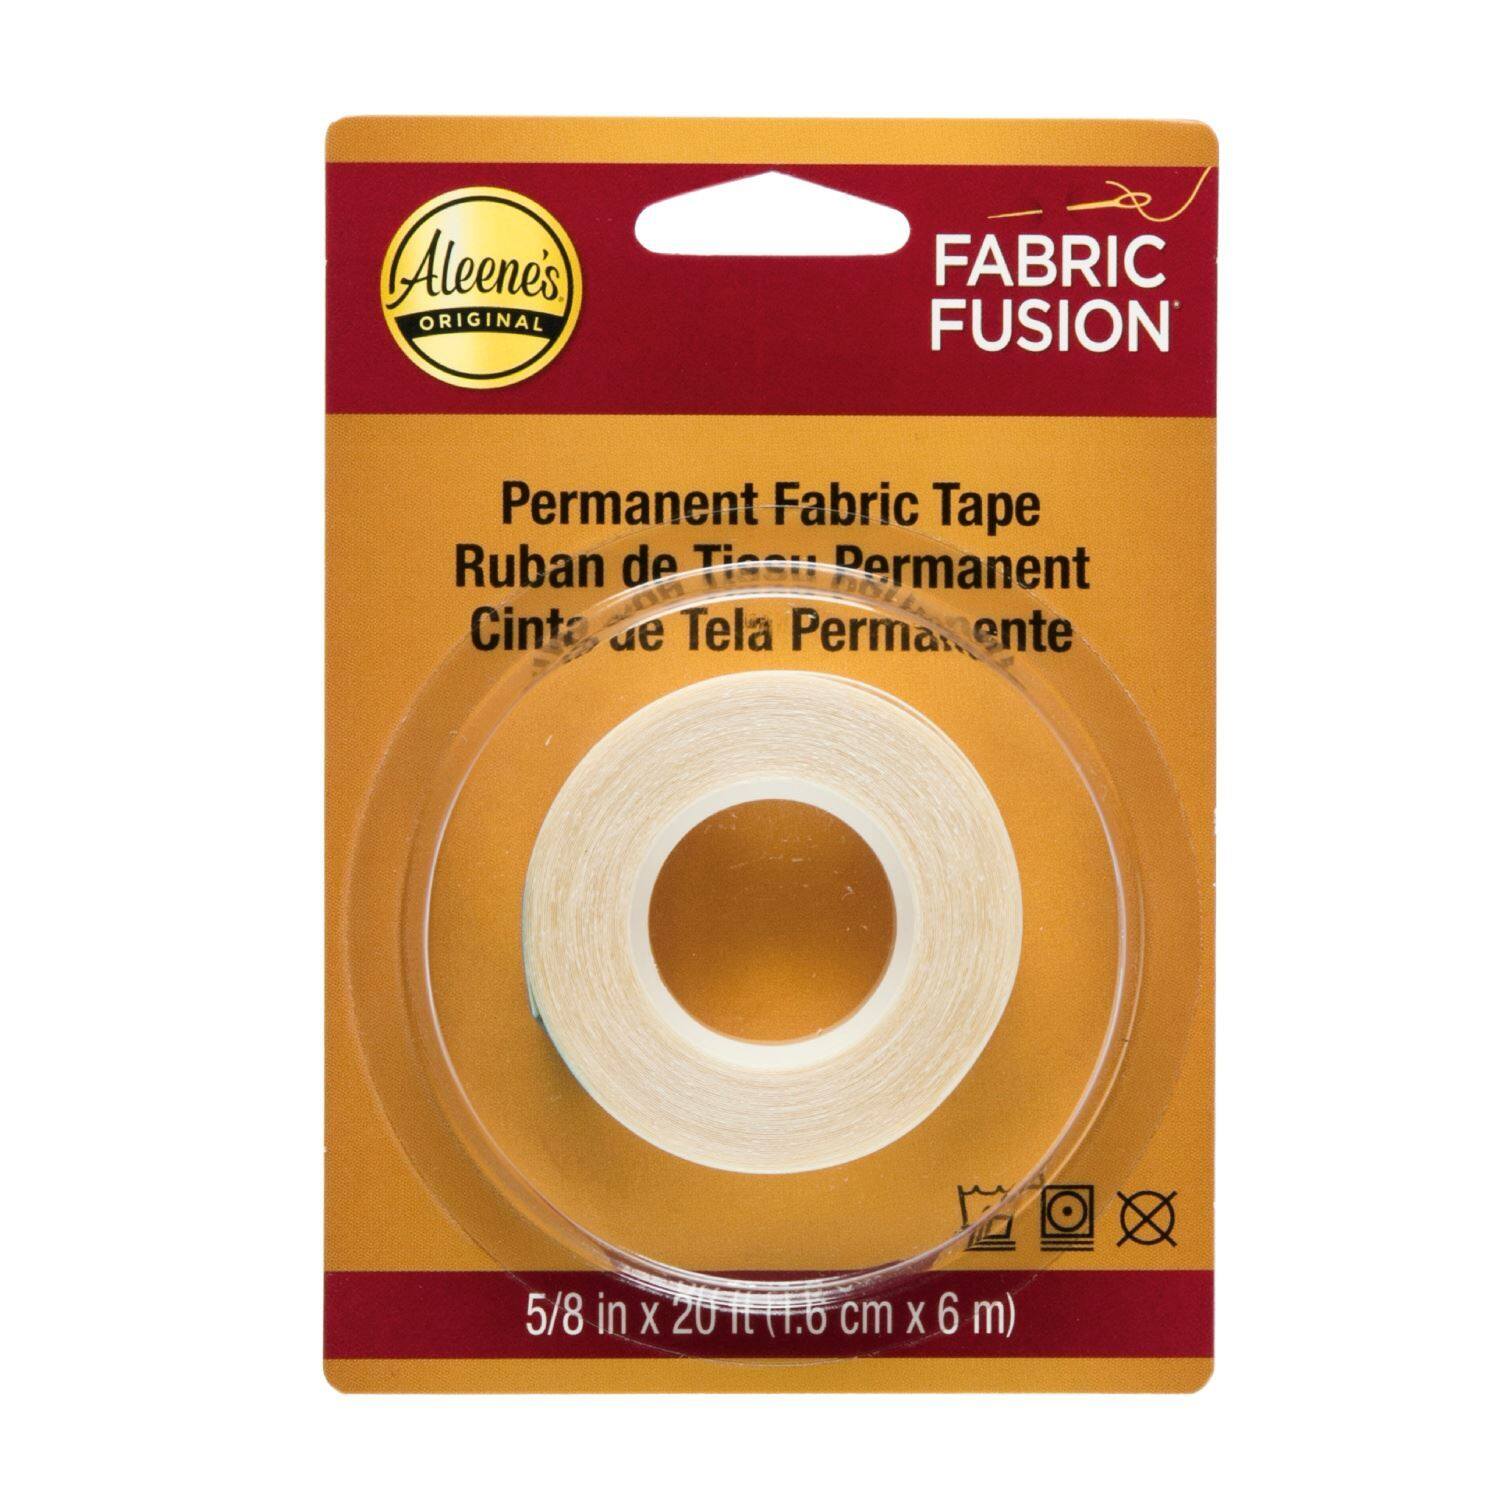 Gold Glitter Metallic Permanent Self Adhesive Vinyl Contact paper Peel  Stick